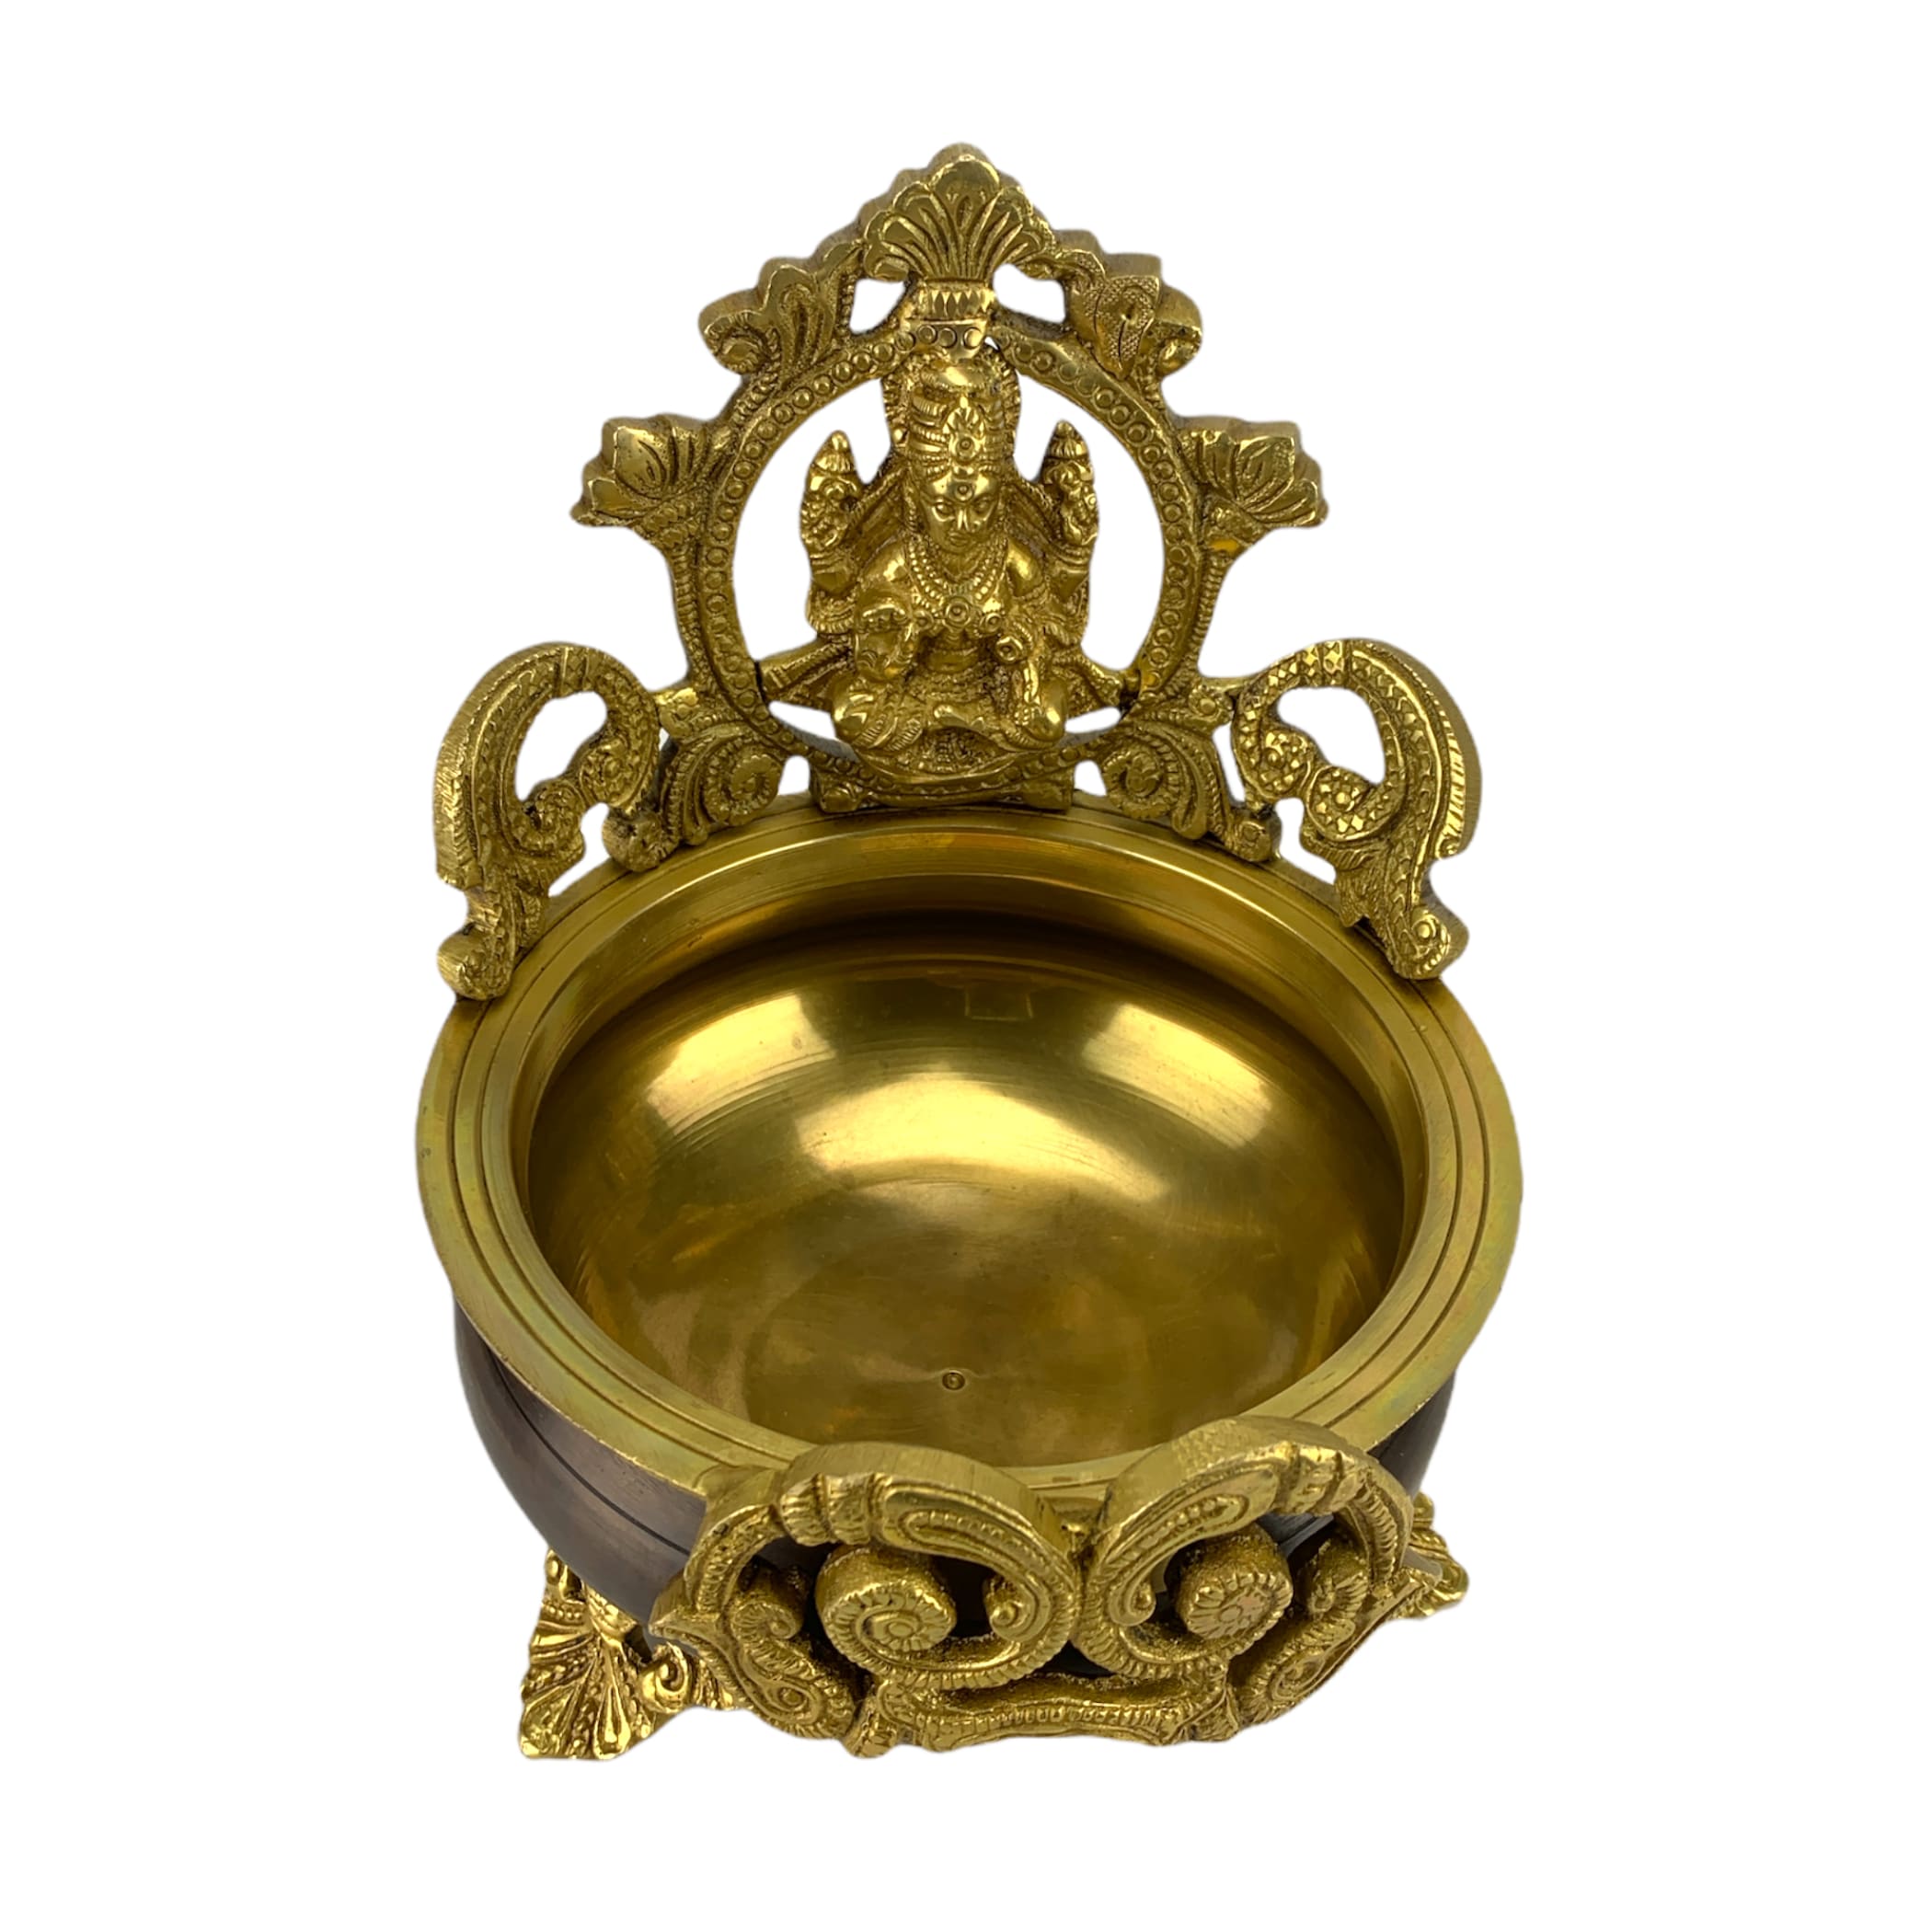 Laxmi urli bowl center table decor brass showpiece for